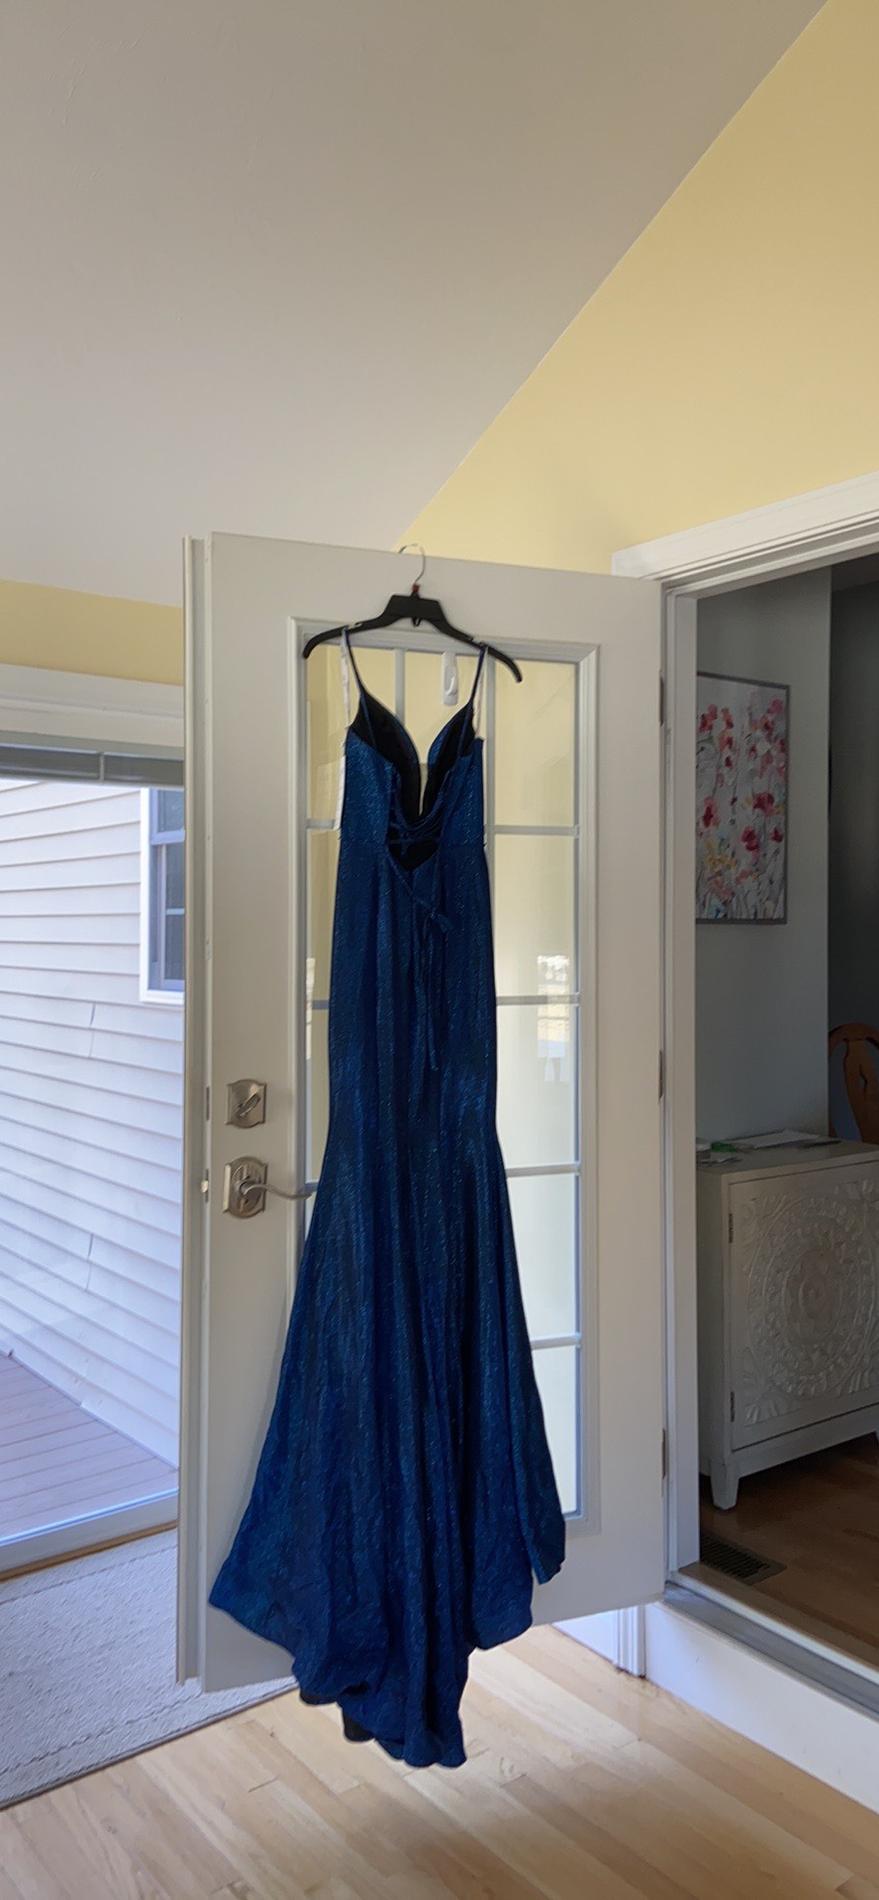 Ellie Wilde Size 0 Prom Plunge Royal Blue Mermaid Dress on Queenly